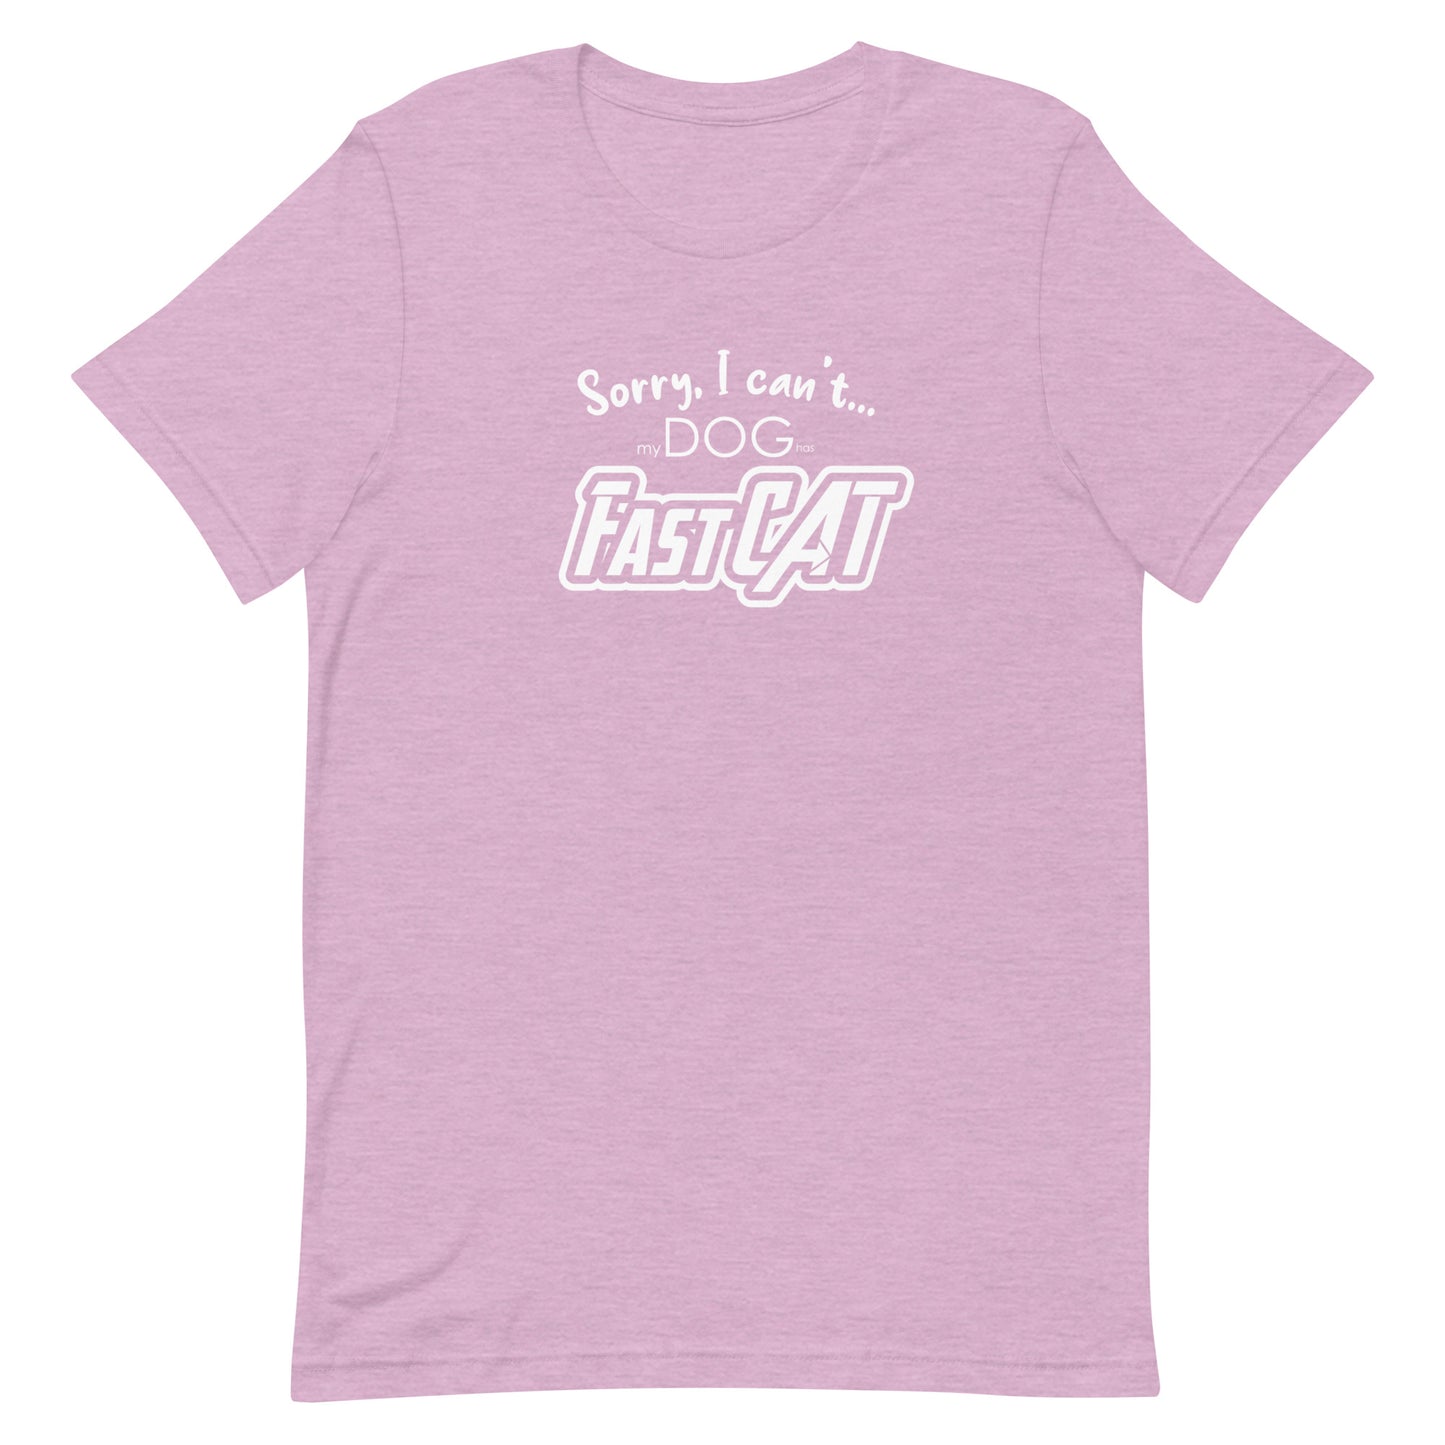 SORRY I CANT - FAST CAT - Unisex t-shirt